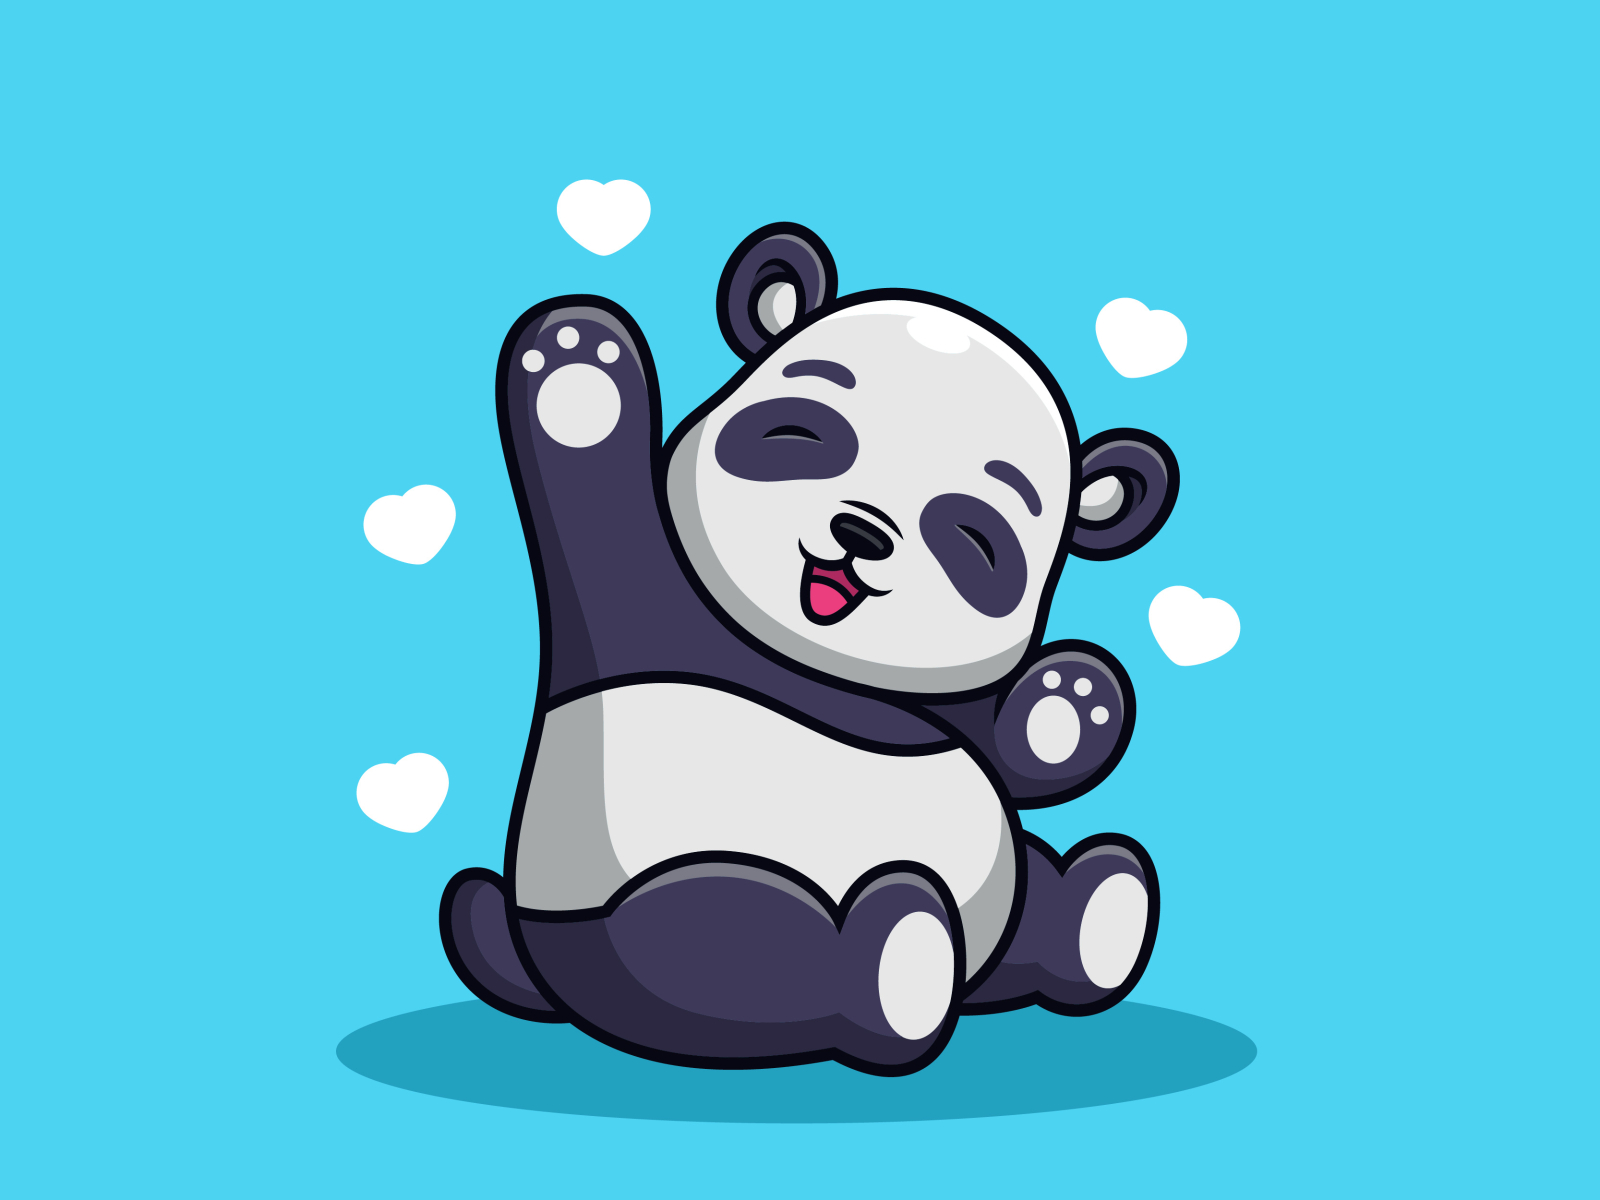 Cute Panda Cartoon ???????? by mex.design on Dribbble